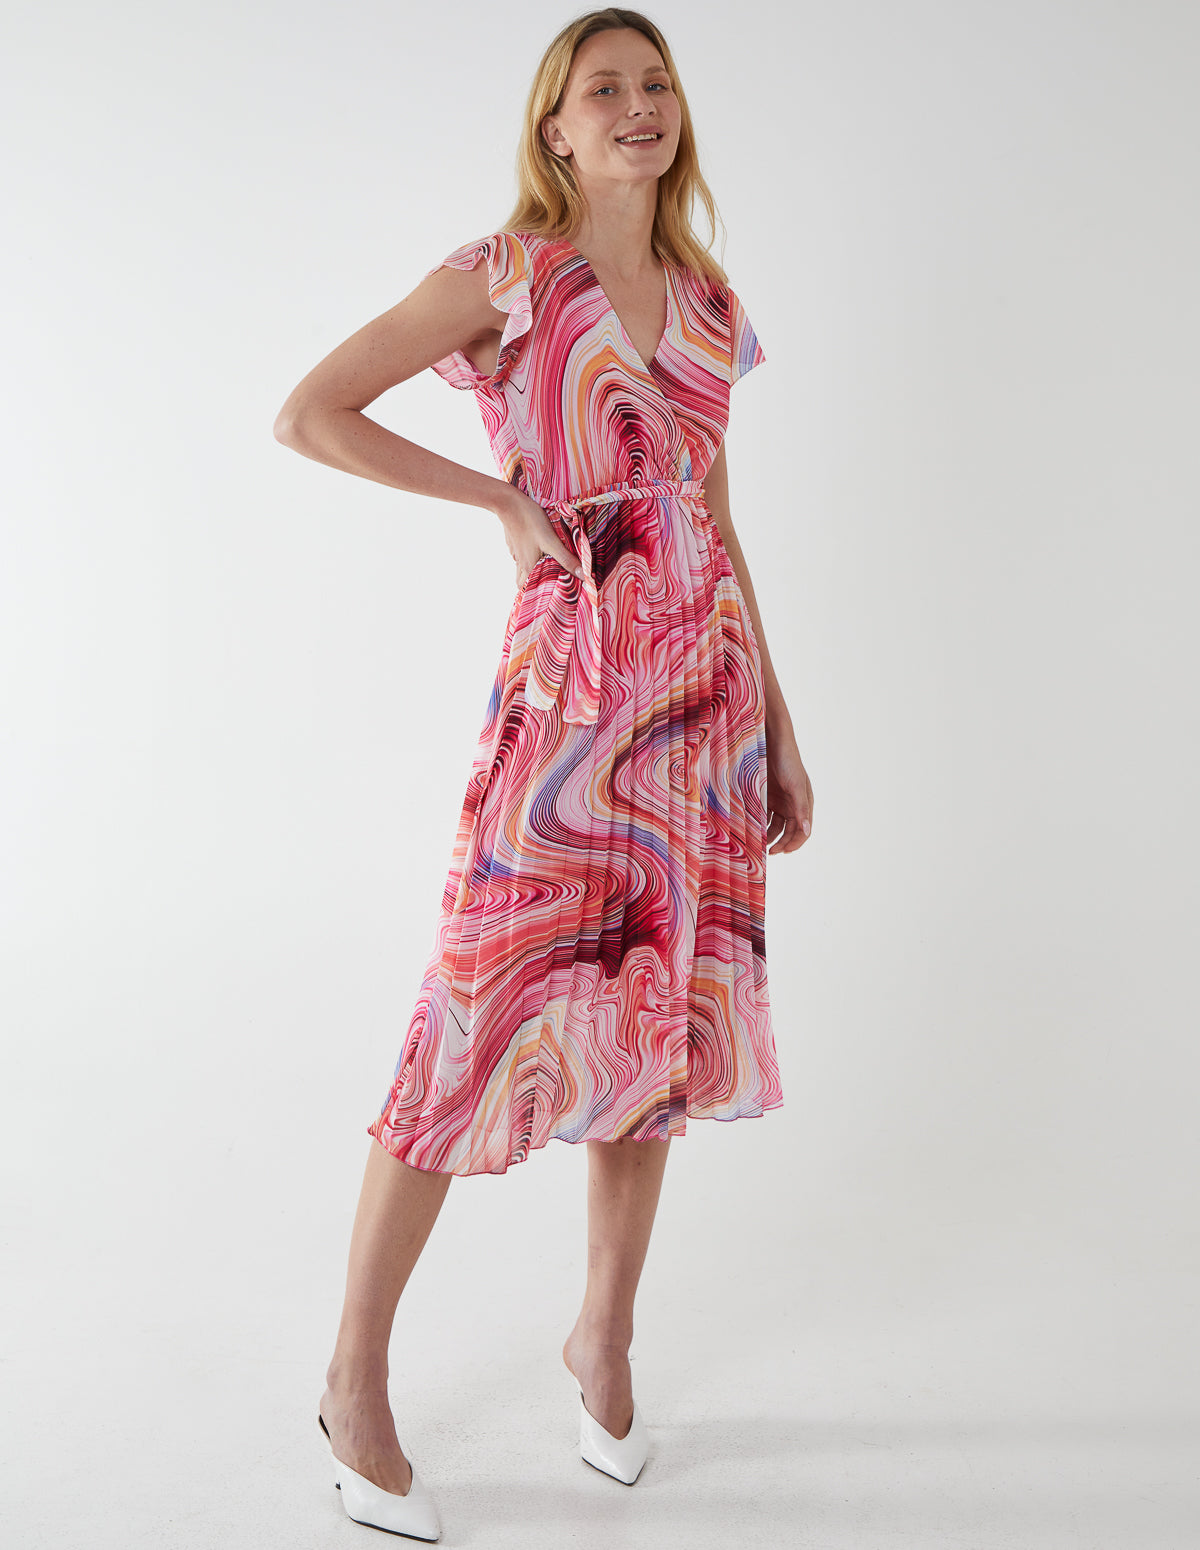 ANTONIETTA - Marble Print Dress 